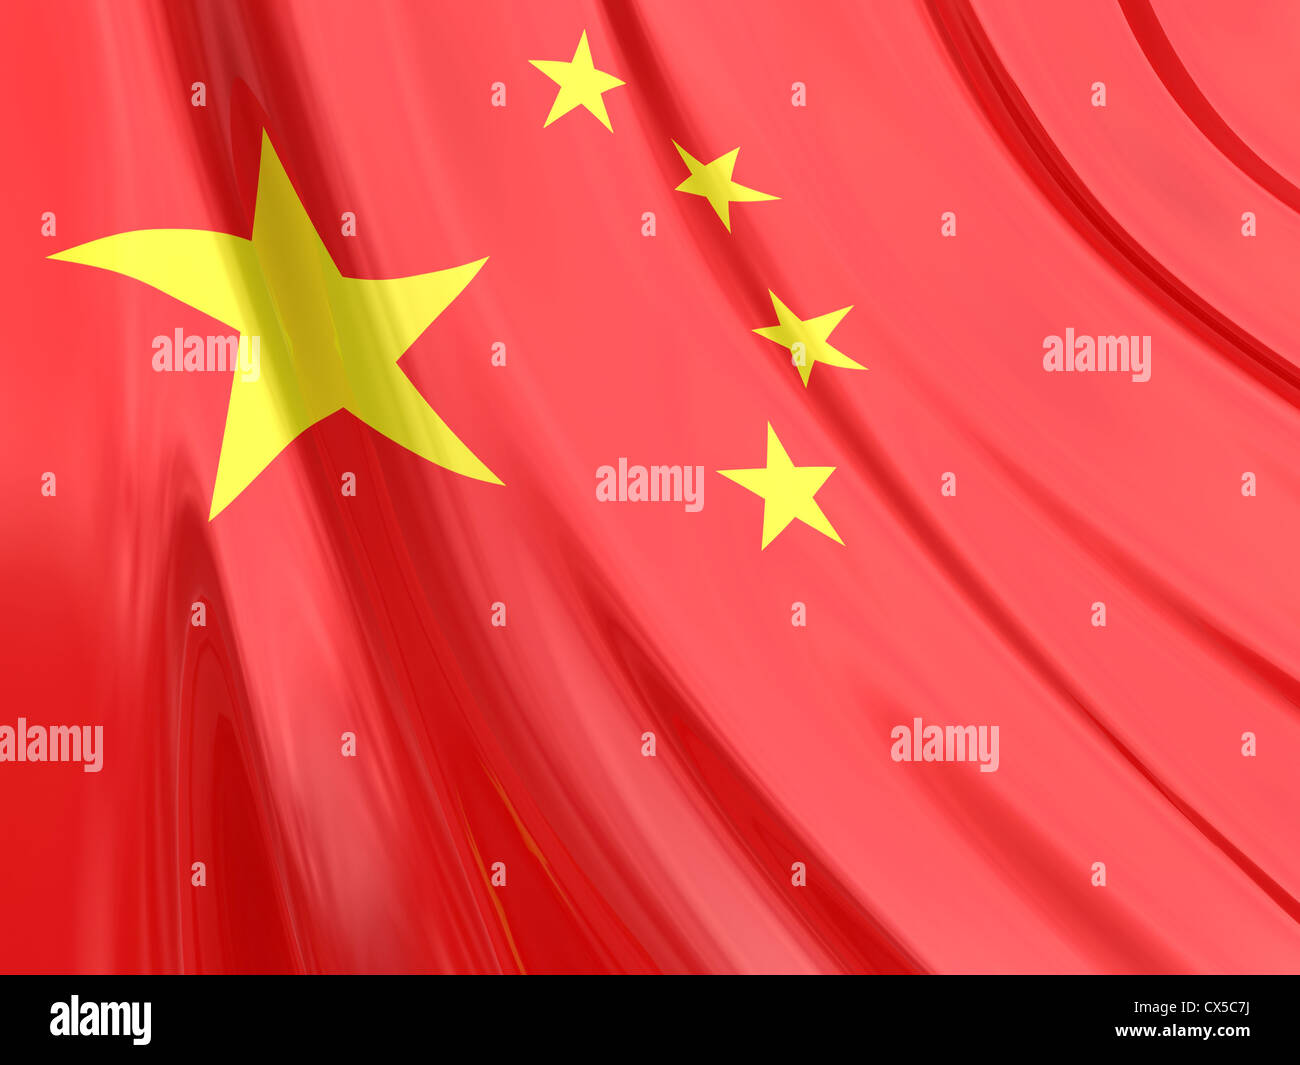 Glossy flag of China. Stock Photo